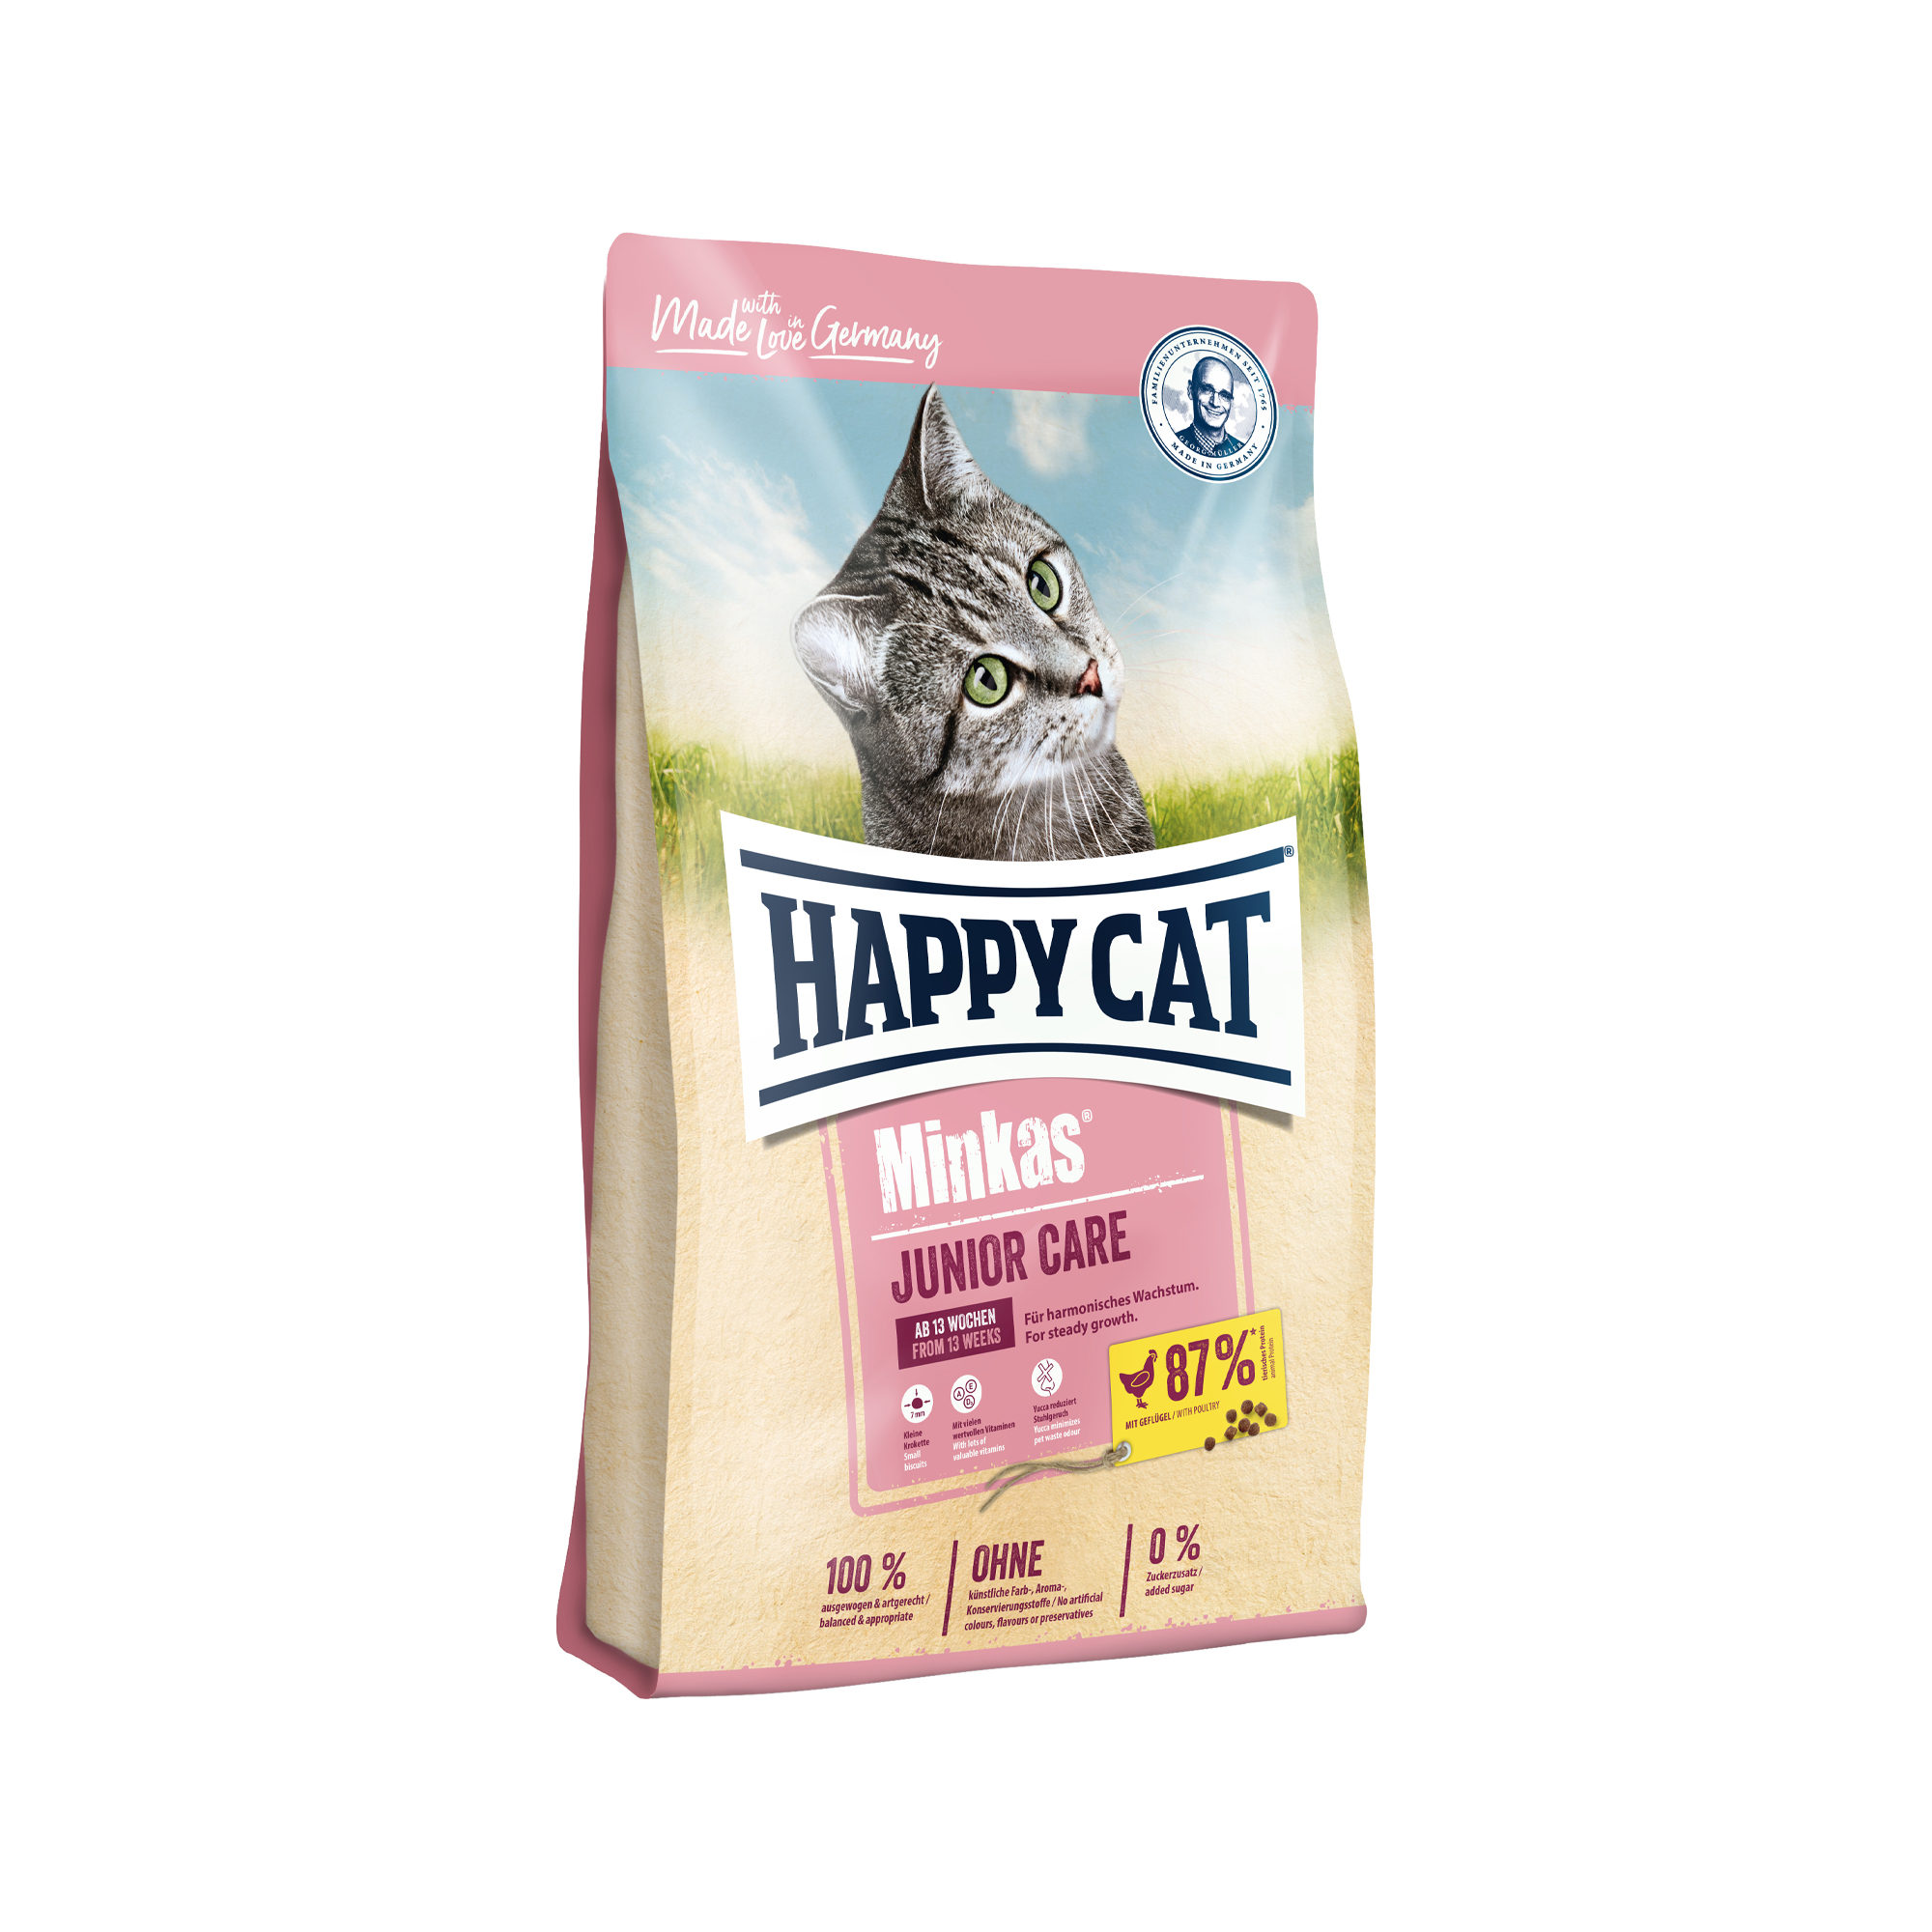 Happy Cat Minkas Junior Care Katzenfutter - Geflügel - 10 kg